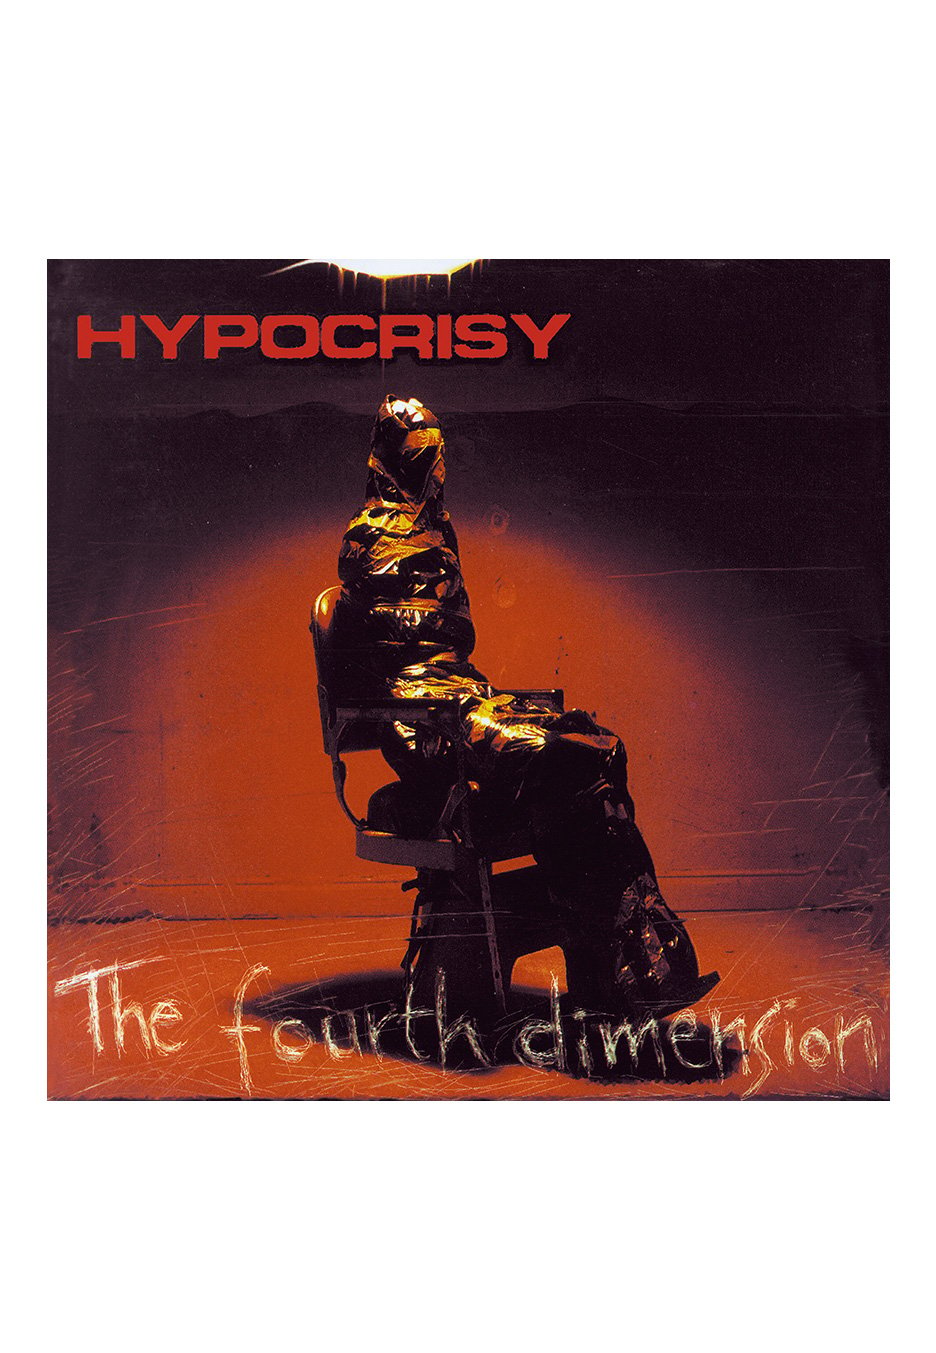 Hypocrisy - The Fourth Dimension (Reissue 2023) Ltd. Transparent Orange - Colored 2 Vinyl